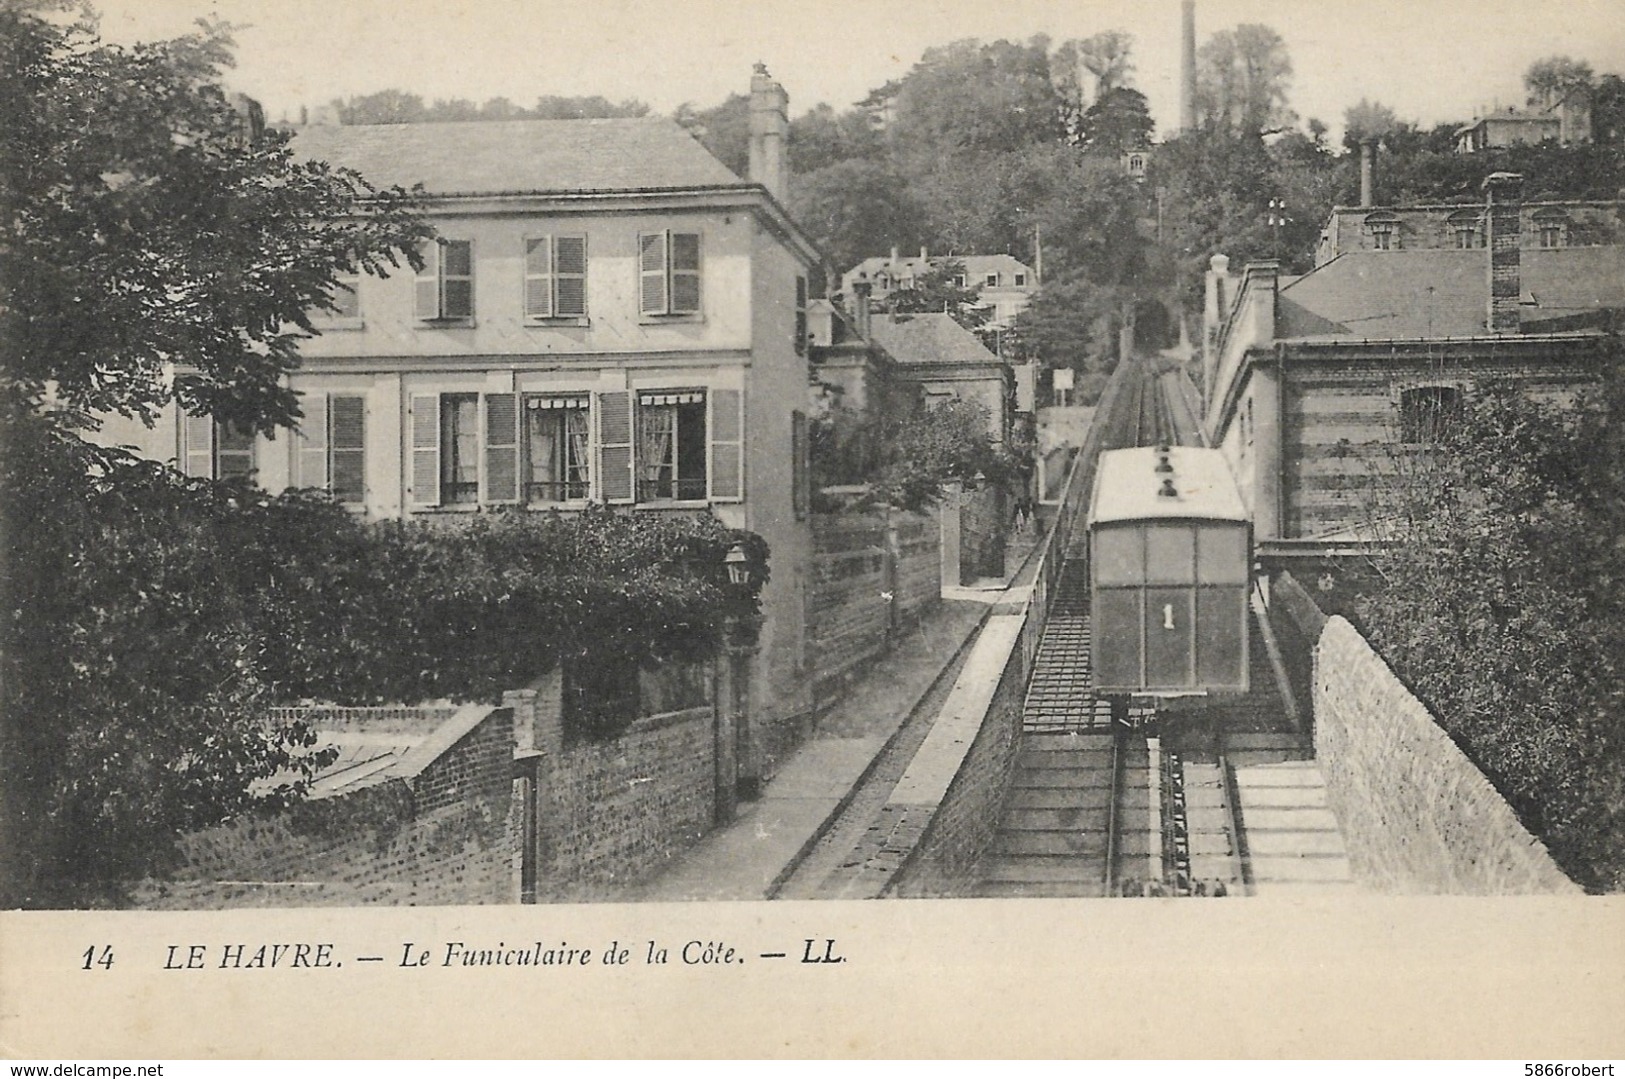 CARTE POSTALE ORIGINALE ANCIENNE  : LE HAVRE LE FUNICULAIRE DE LA COTE SEINE MARITIME (76) - Funicular Railway